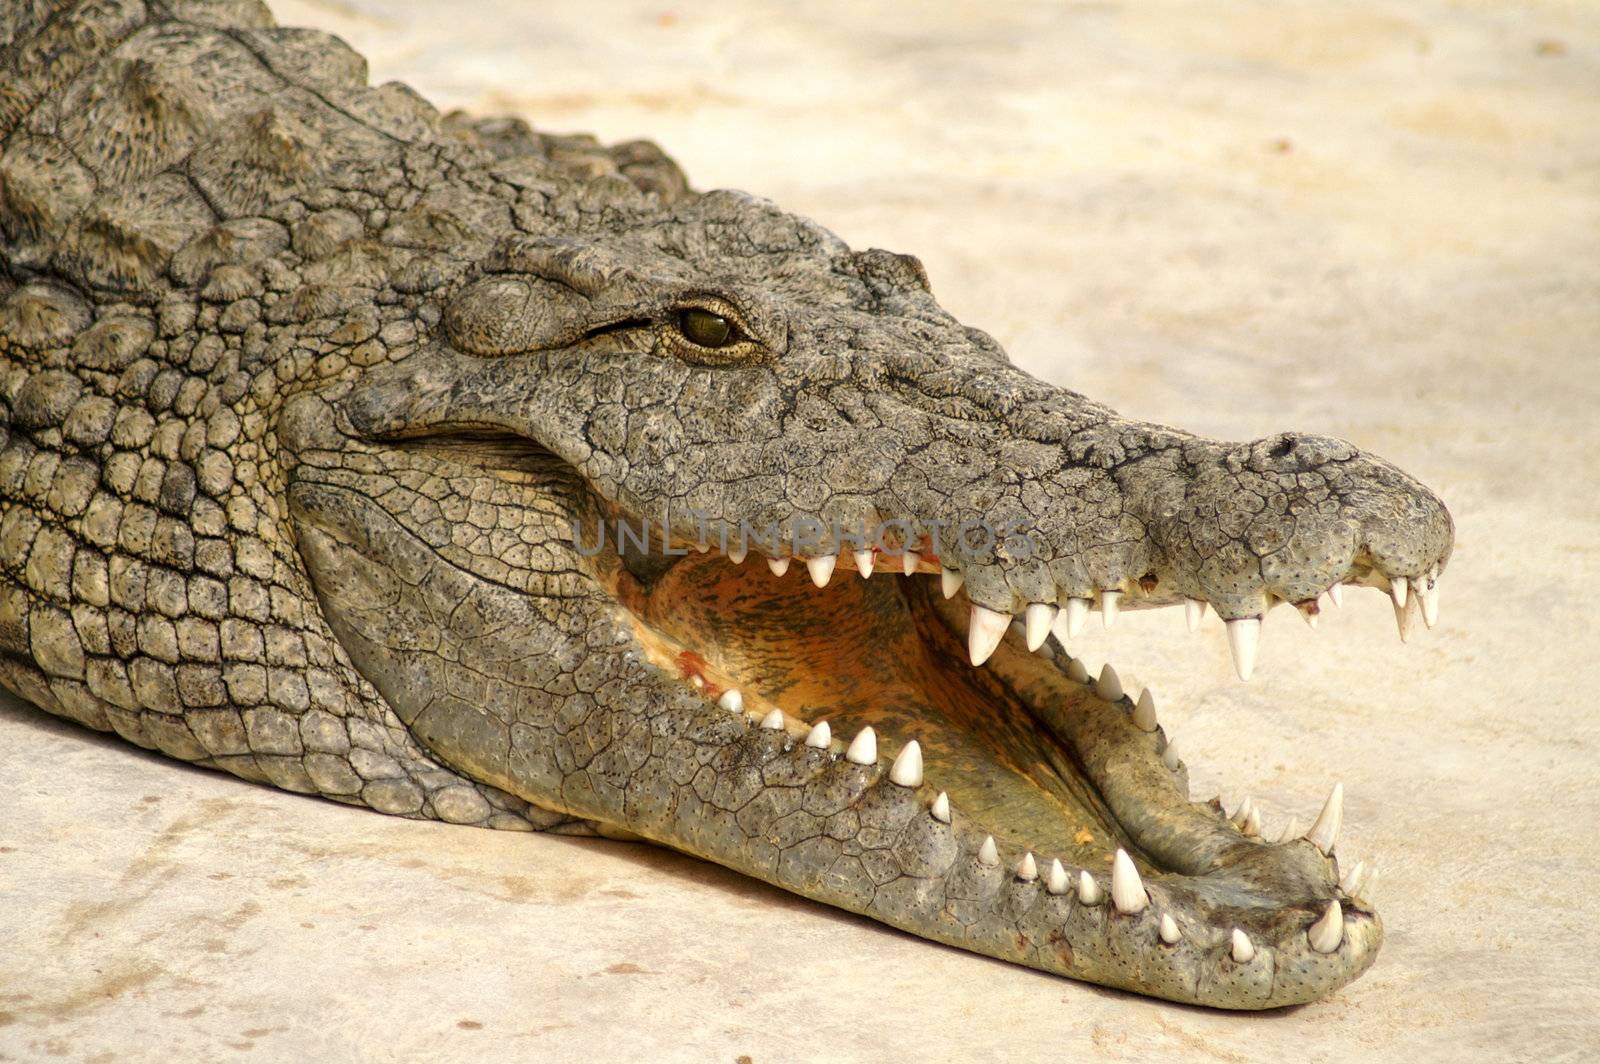 dangerous alligator by photochecker